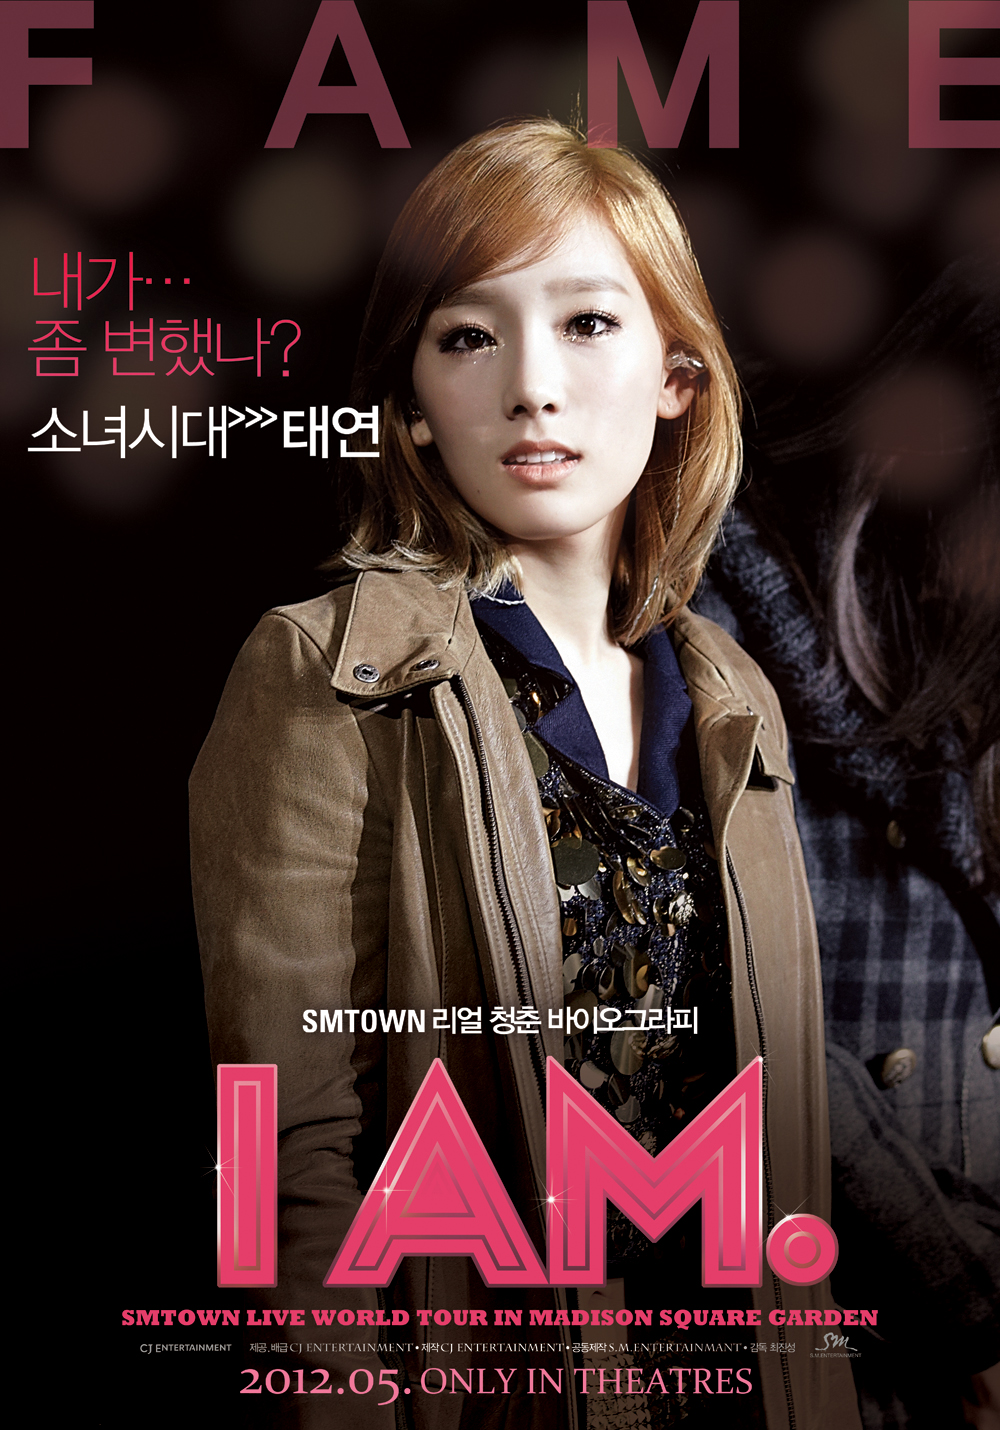 Taeyeon-I-Am-poster-girls-generation-sns